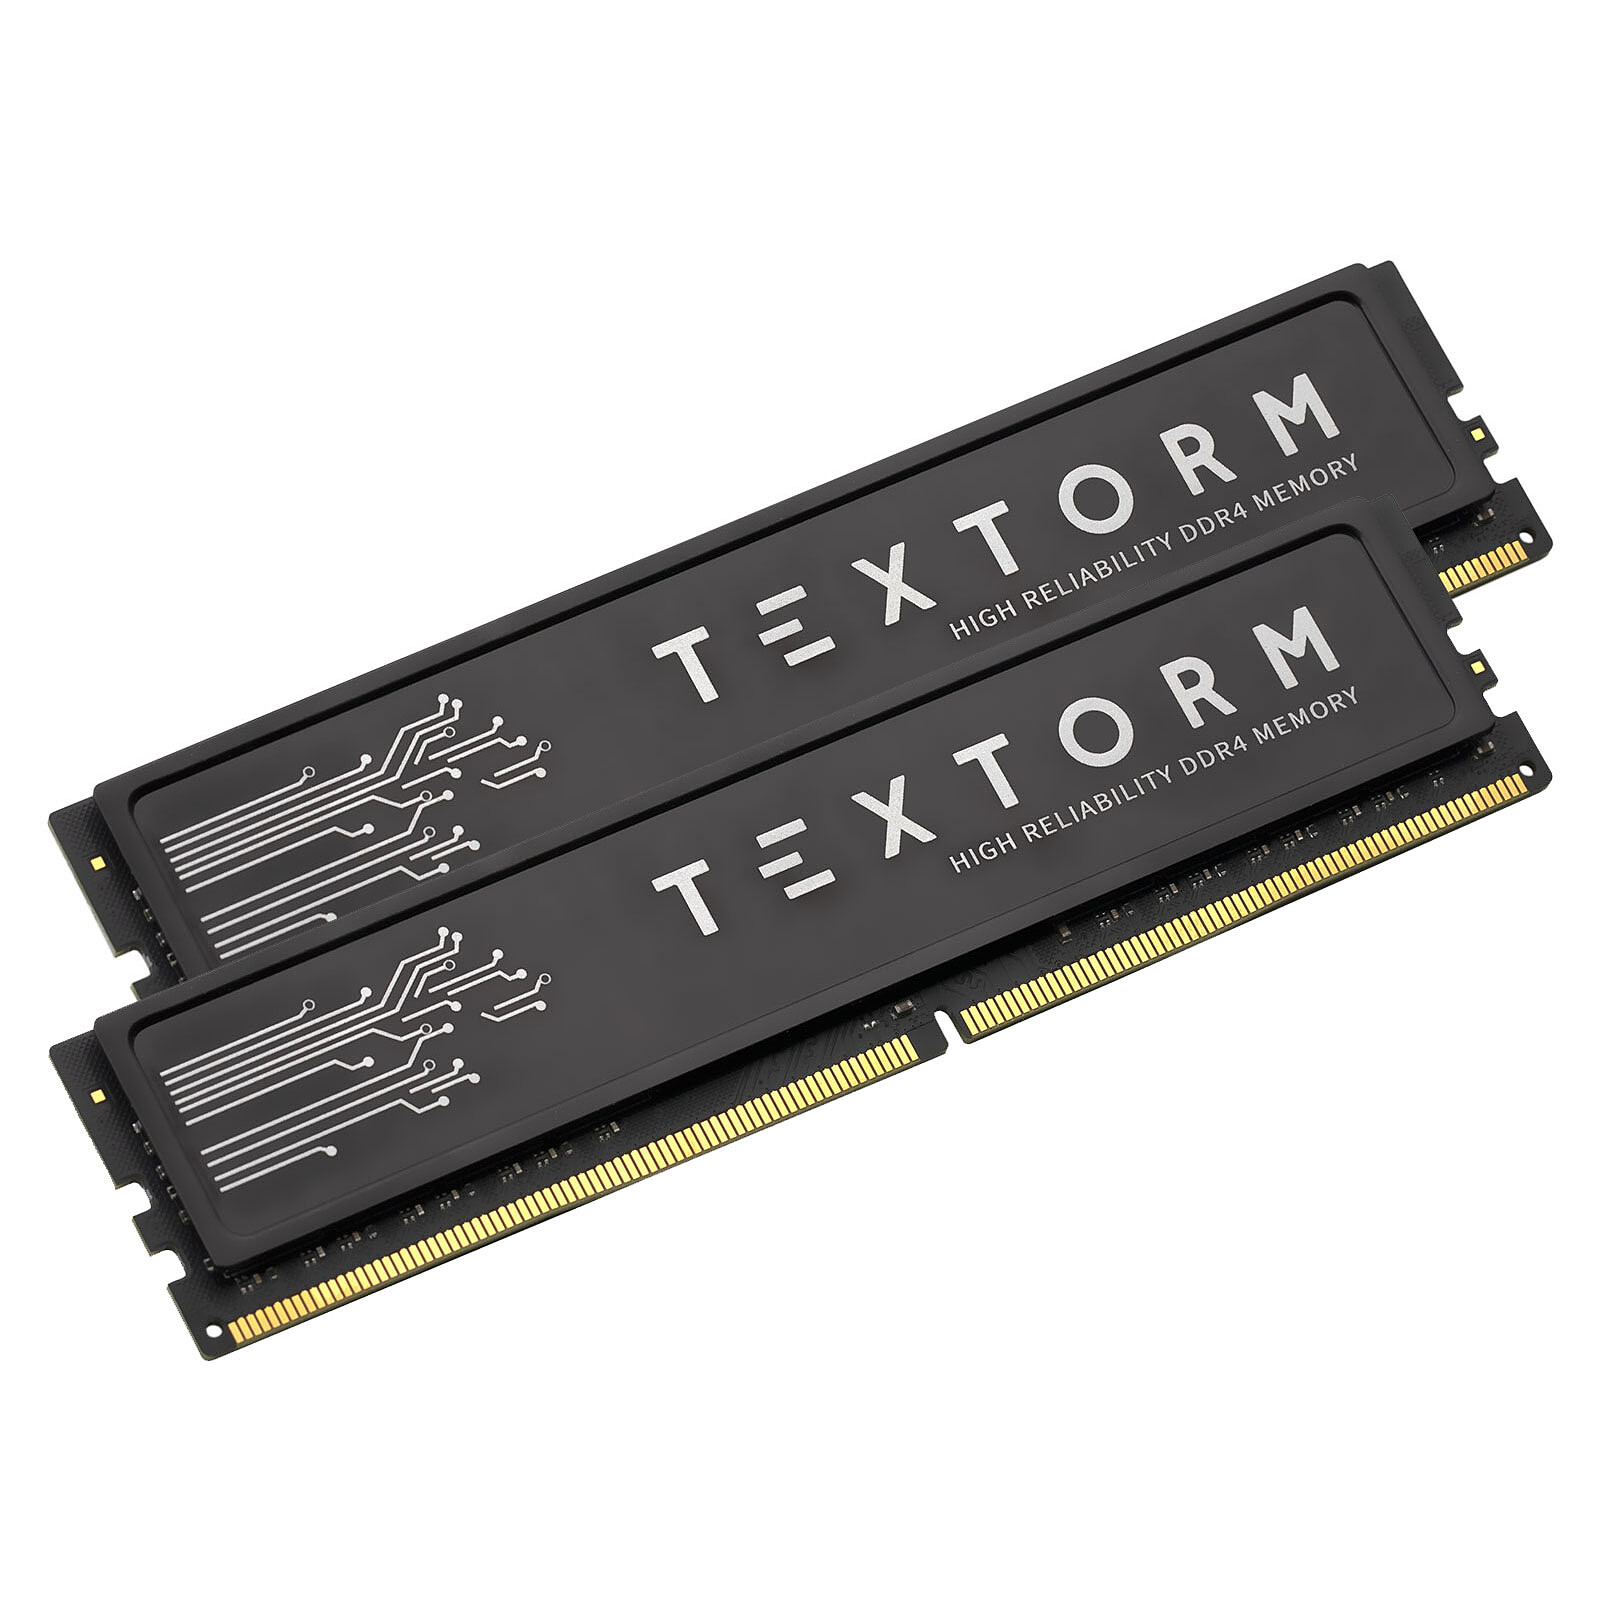 Textorm SO-DIMM 32 Go (2x 16 Go) DDR4 2666 MHz CL19 - Achat